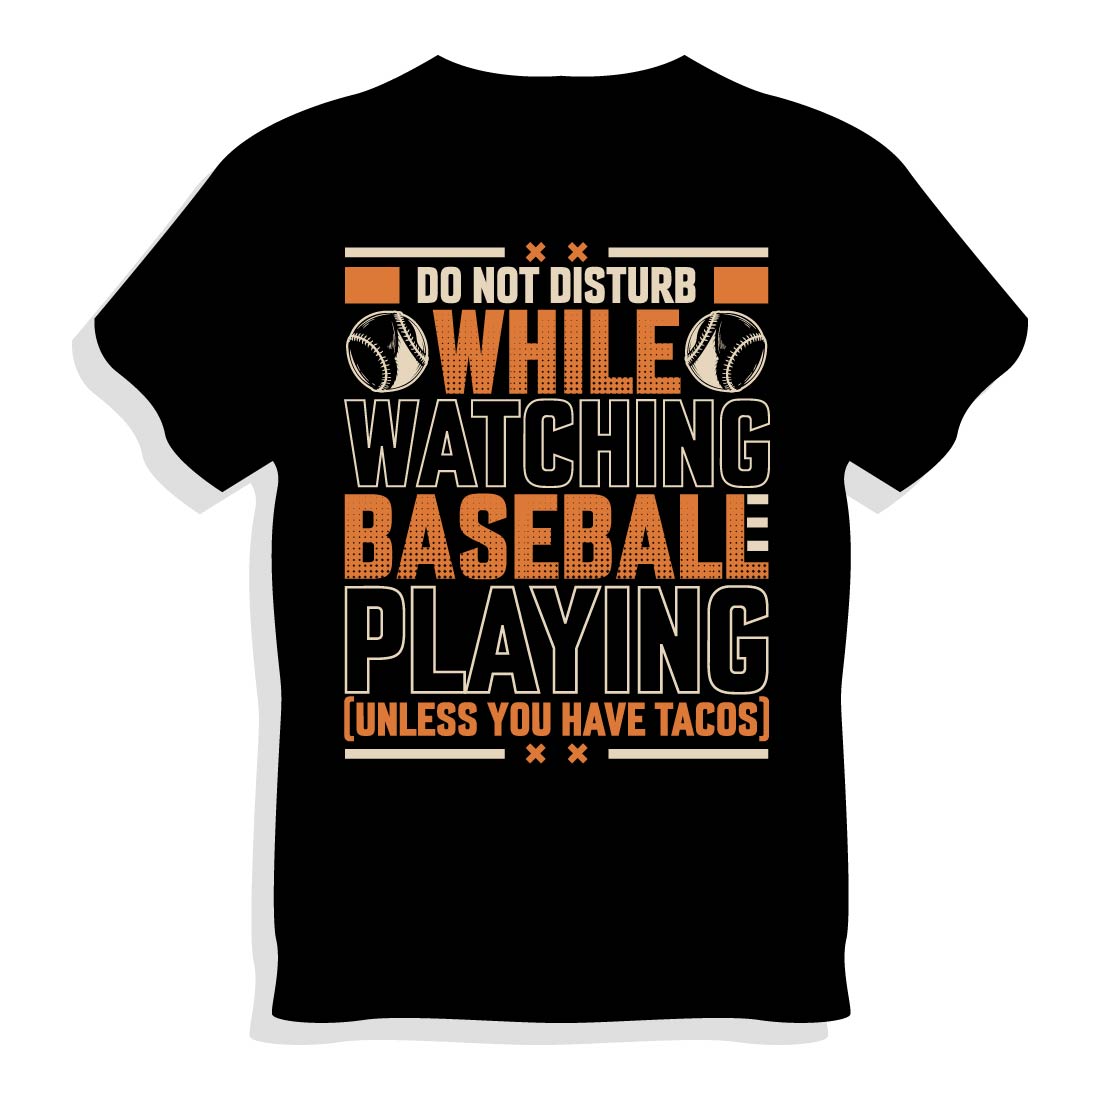 Baseball T-shirt Design, Do not disturb while watching baseball playing cover image.